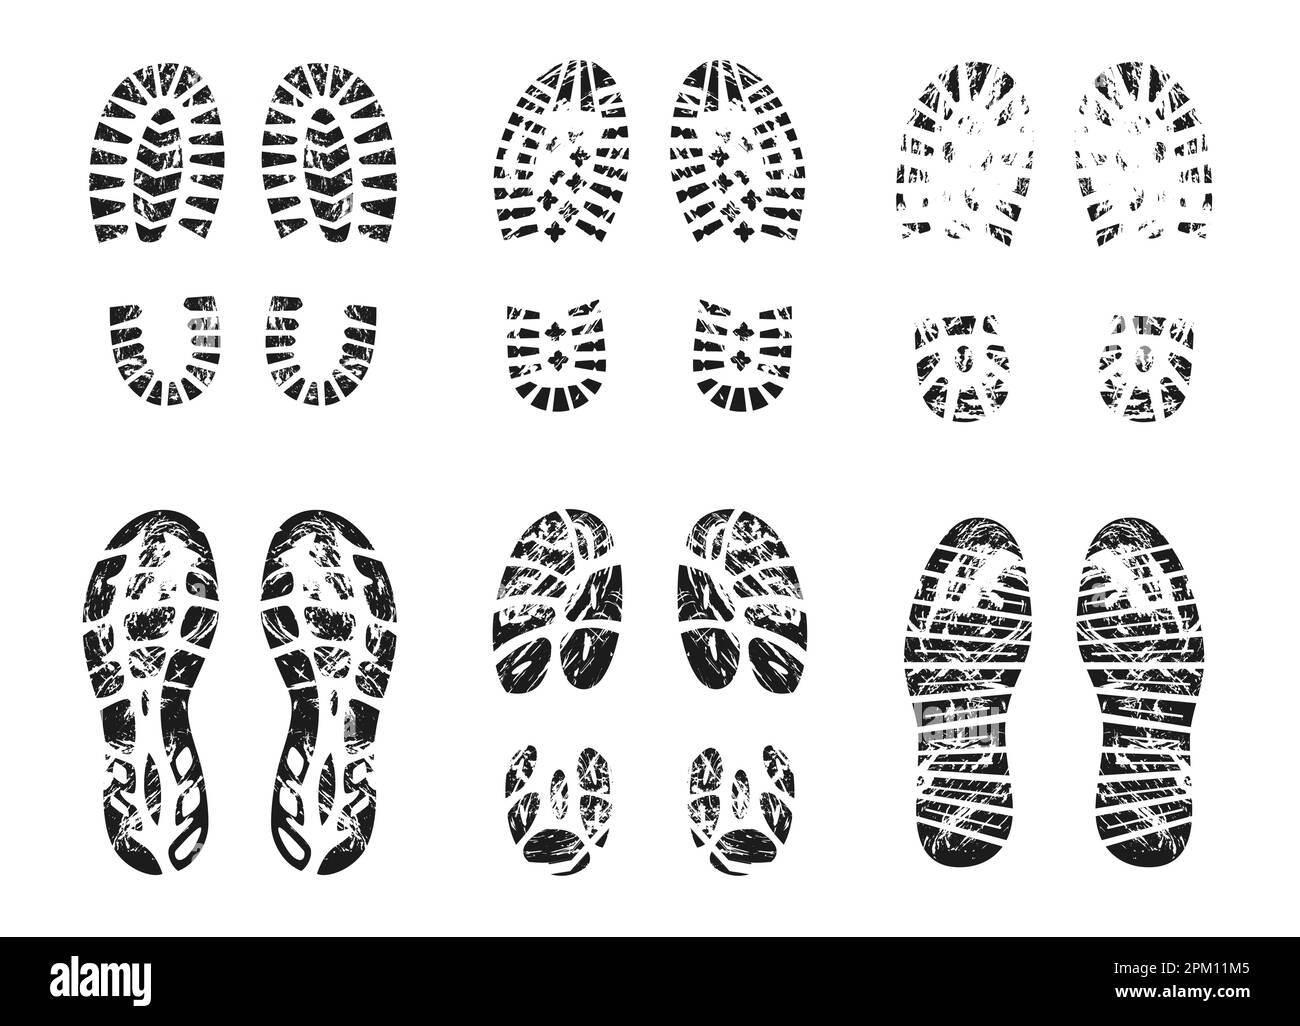 Grunge silhouette of footprint vector illustrations set Stock Vector ...